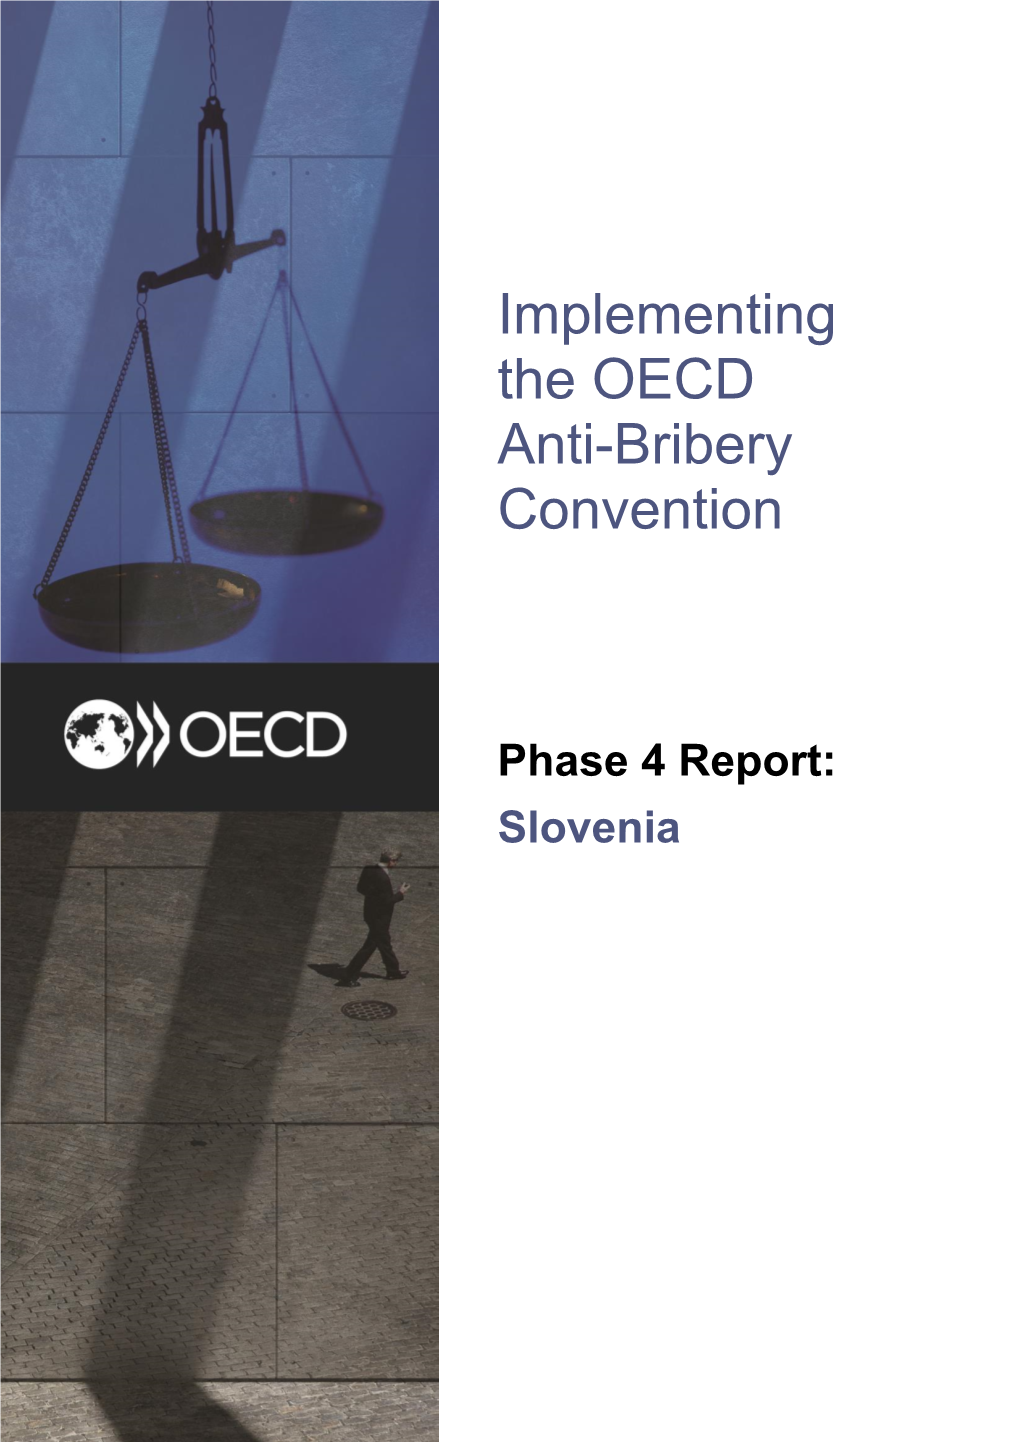 Phase 4 Report: Slovenia